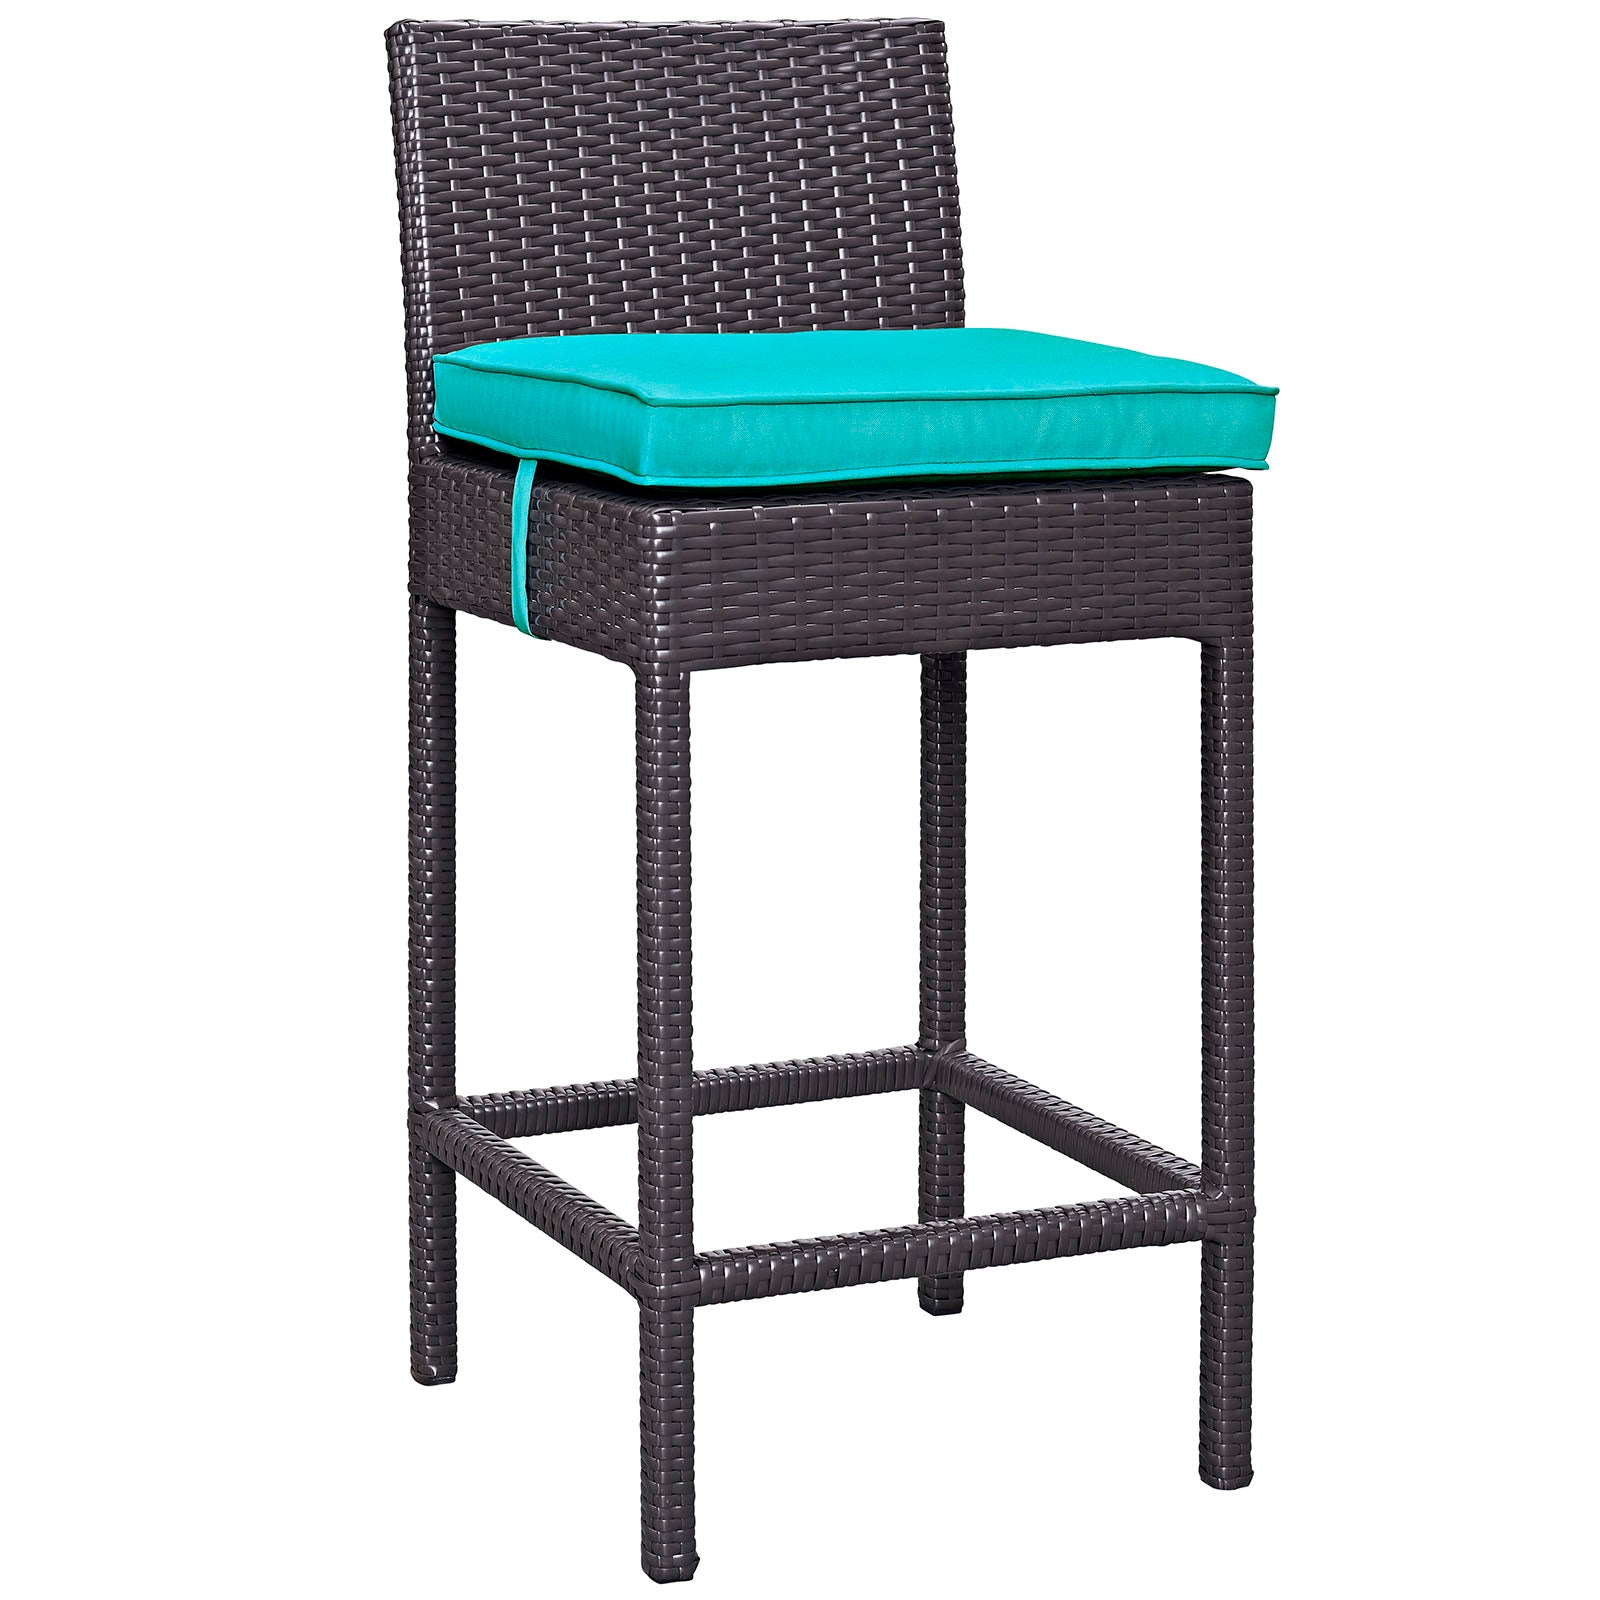 Modway Outdoor Barstools - Convene Outdoor Patio Fabric Bar Stool Espresso Turquoise